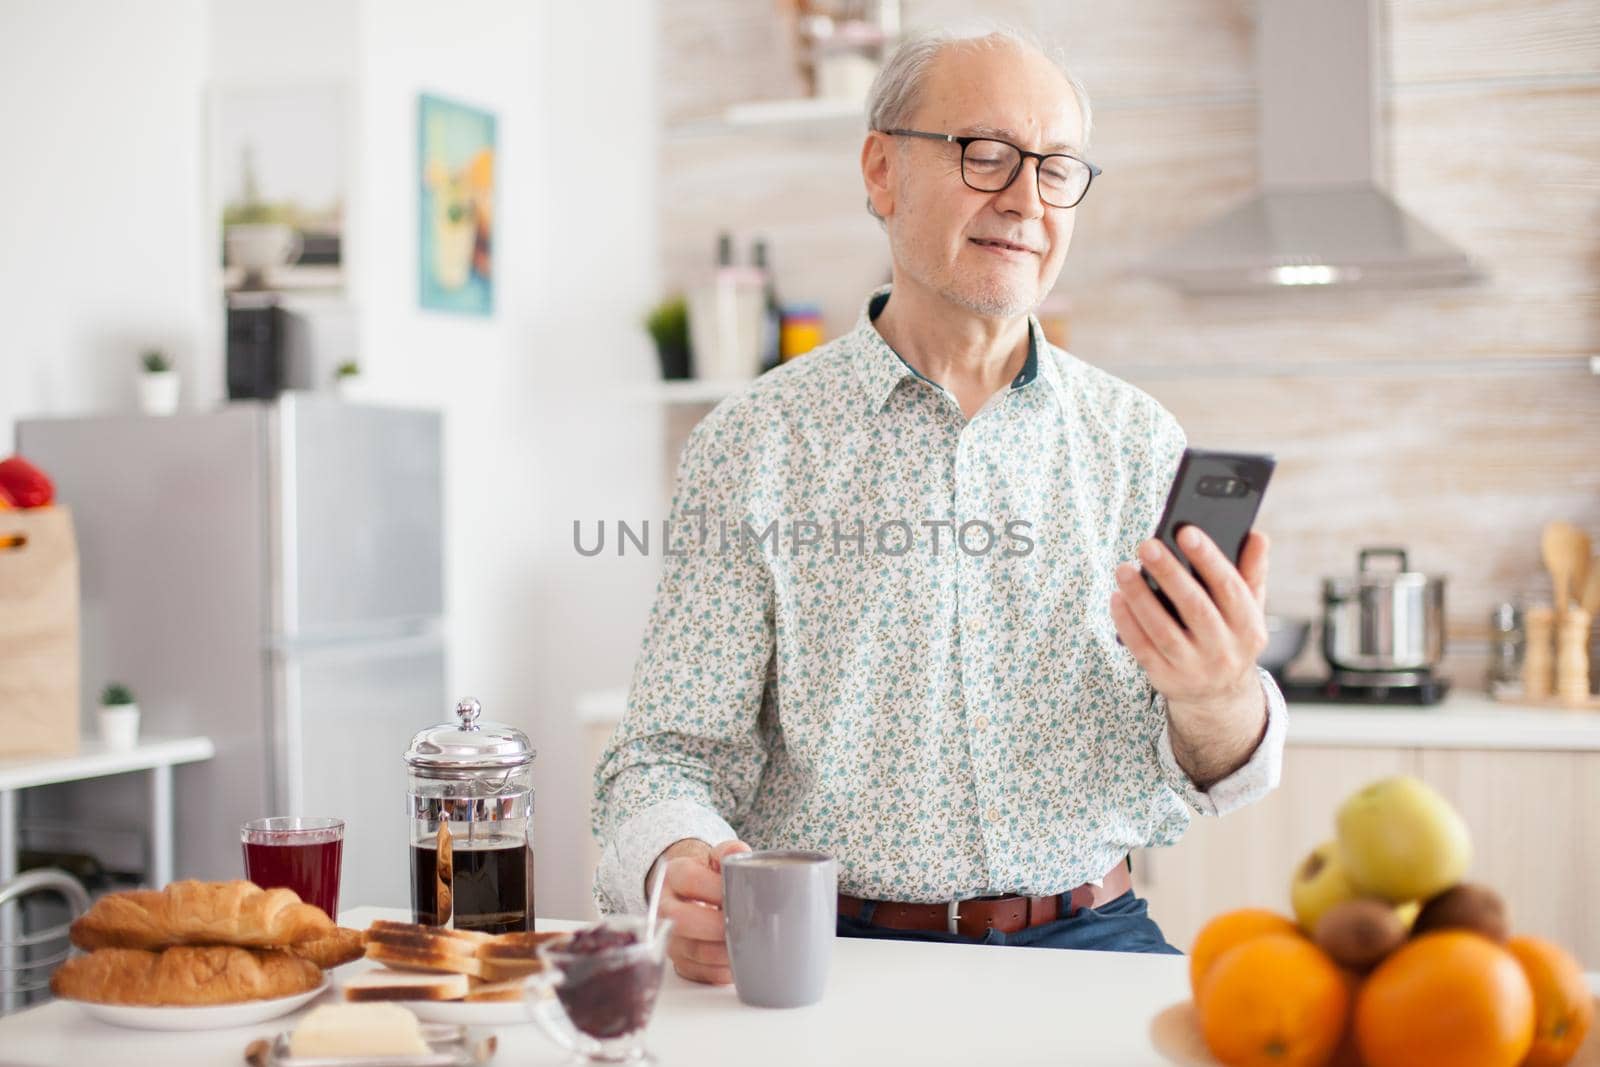 Senior man browsing on internet using smartphone in kitchen while enjoying morning coffee during breakfast. Authentic portrait of retired senior enjoying modern internet online technology